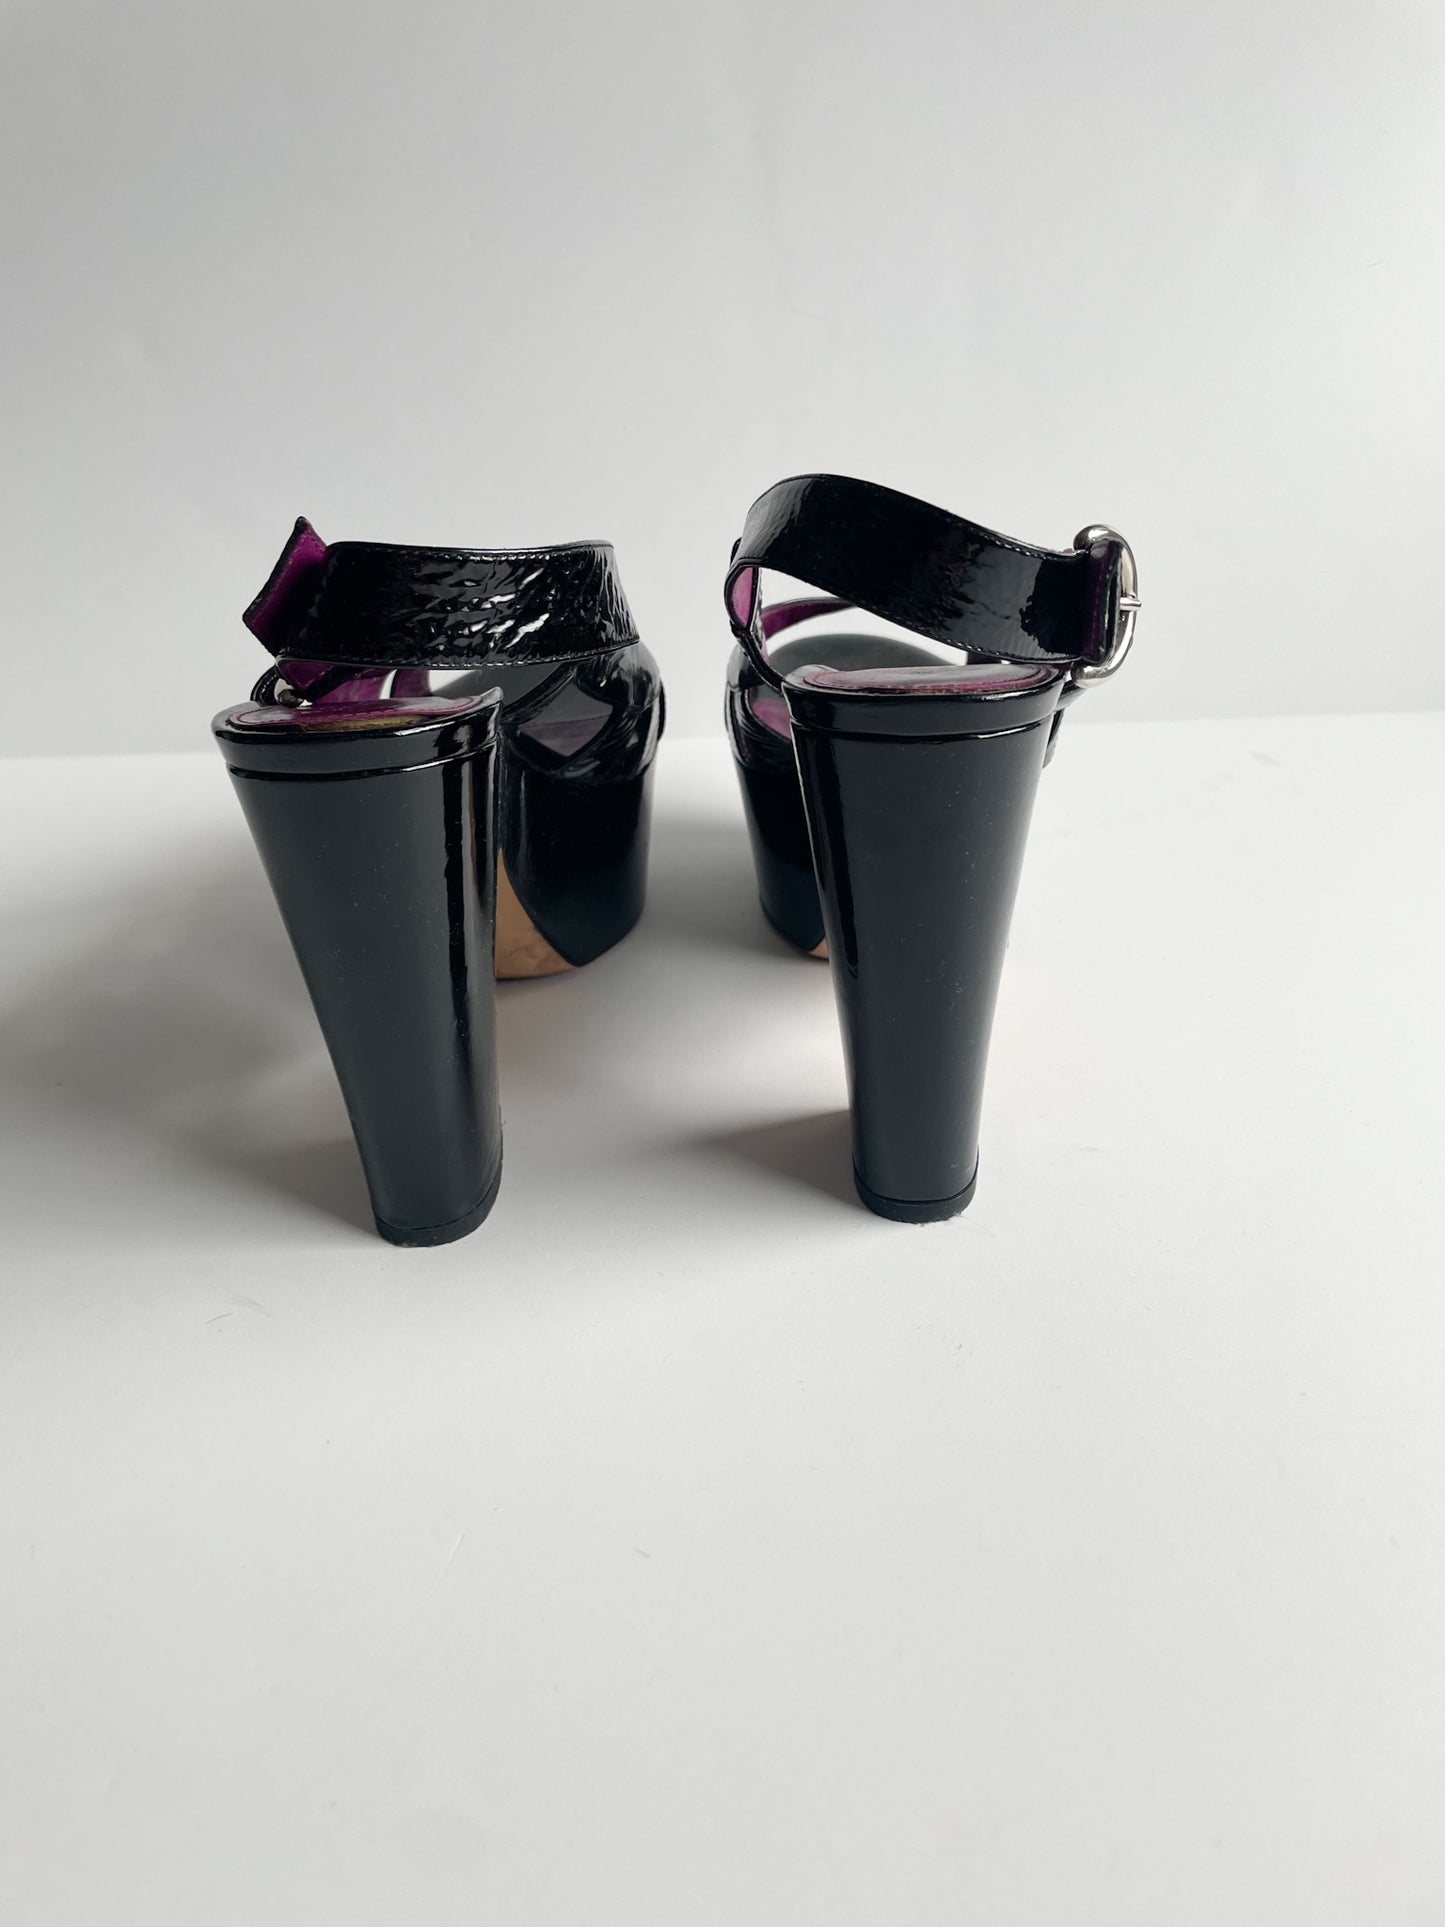 Sergio Rossi Black Patent Leather Luxury Platform Slingback Sandal Heels - Size 38.5 (8.5)